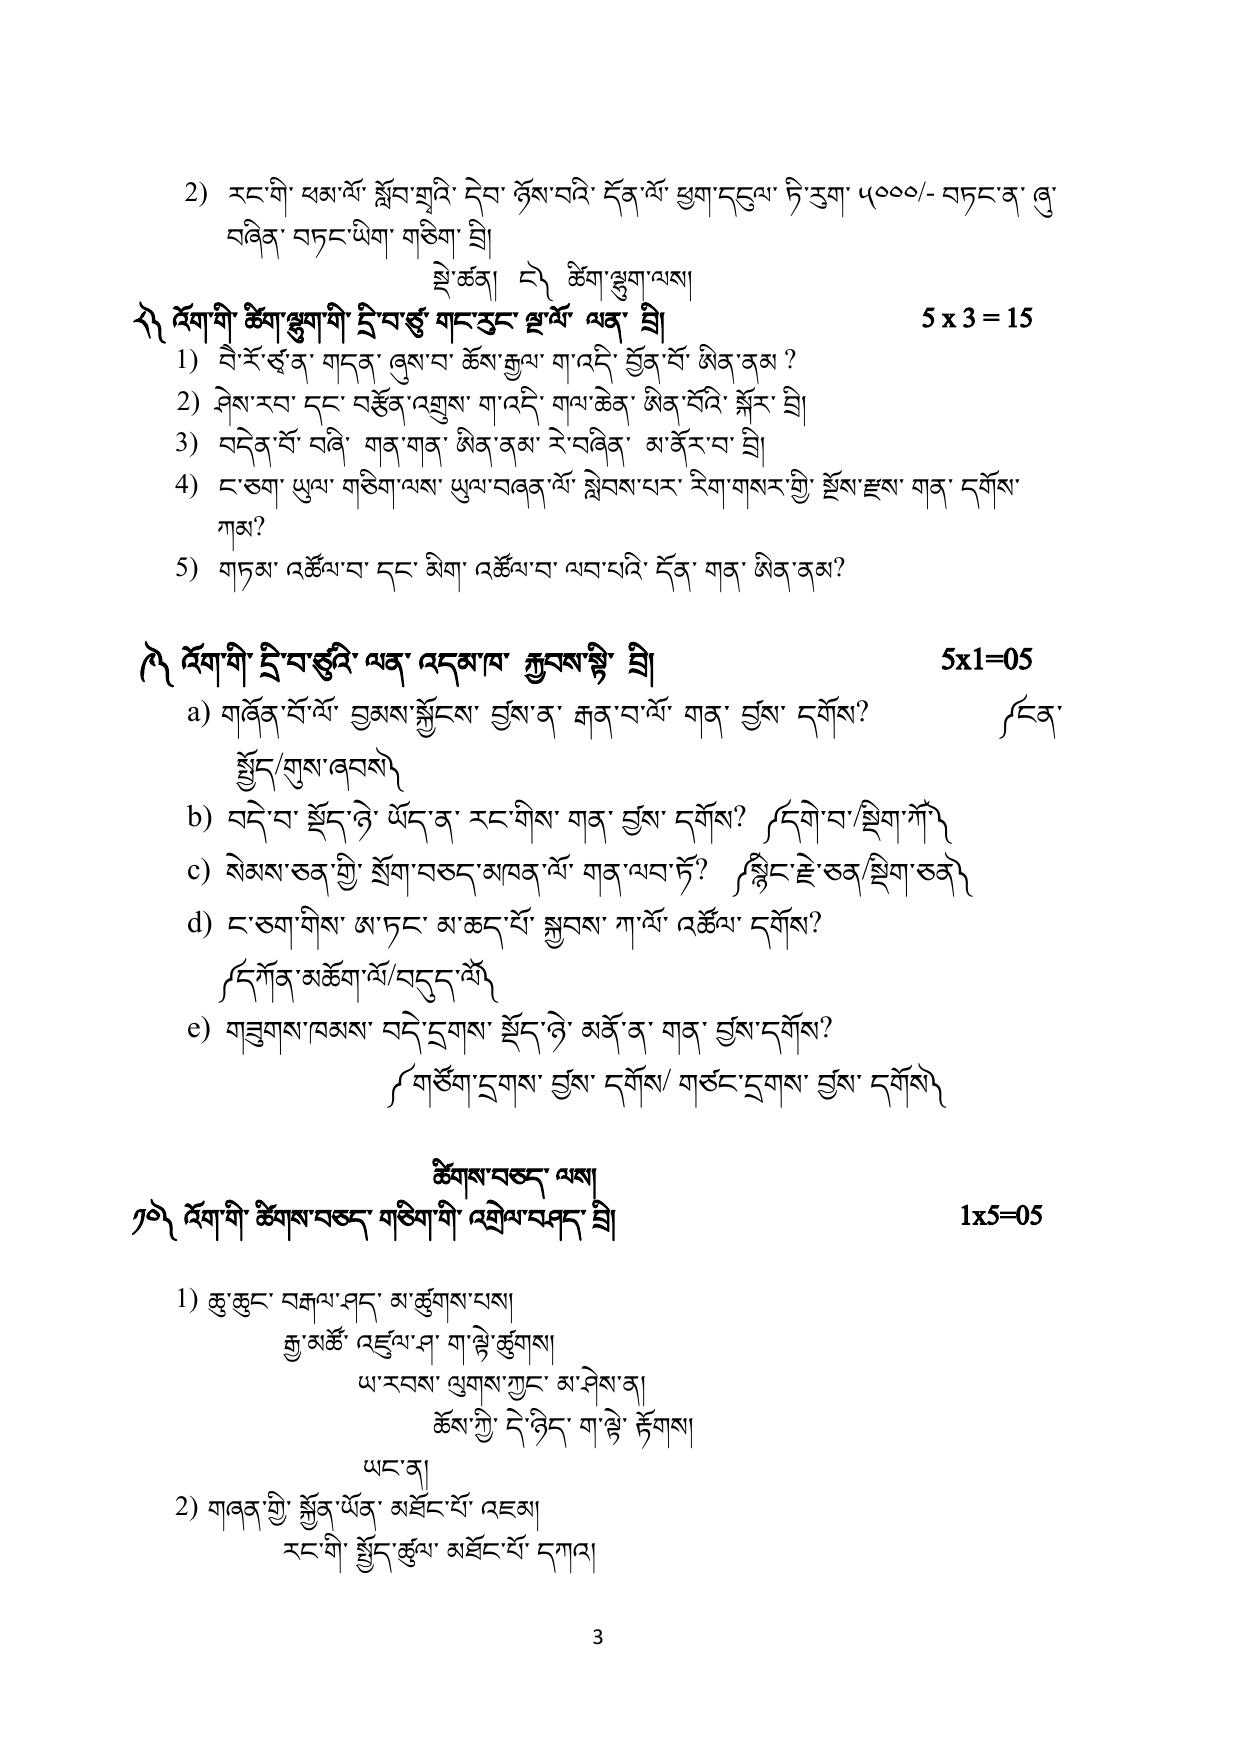 CBSE Class 12 Bhutia-Sample Paper 2018-19 - Page 3